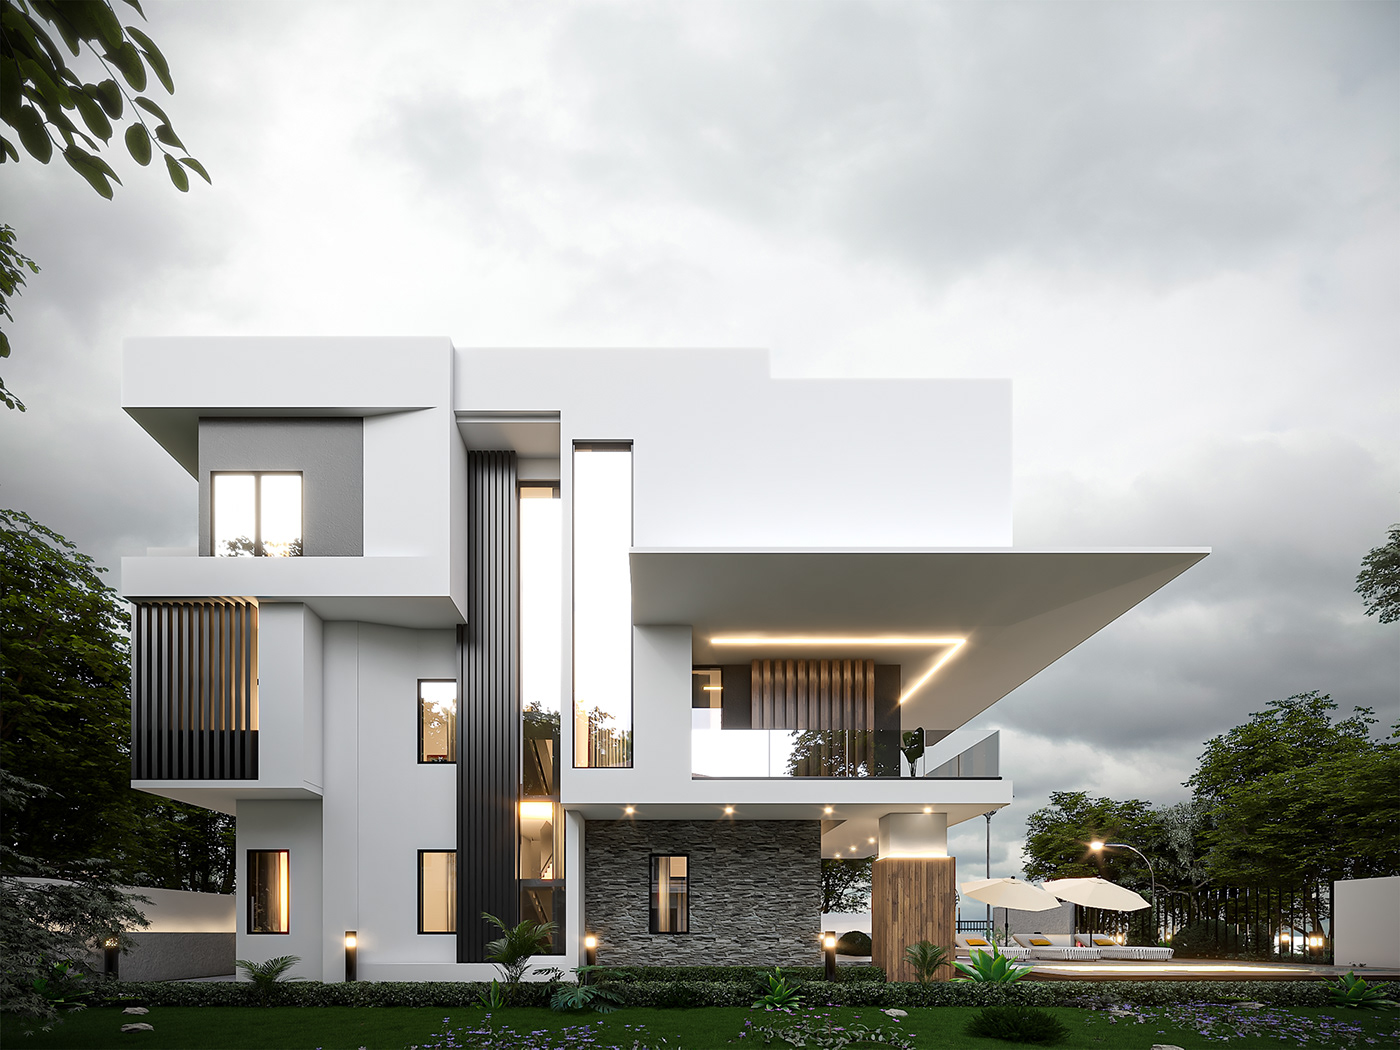 architecture visualization modern vray exterior ivory coast duplex homedesign 5bedroom villa luxuryhome